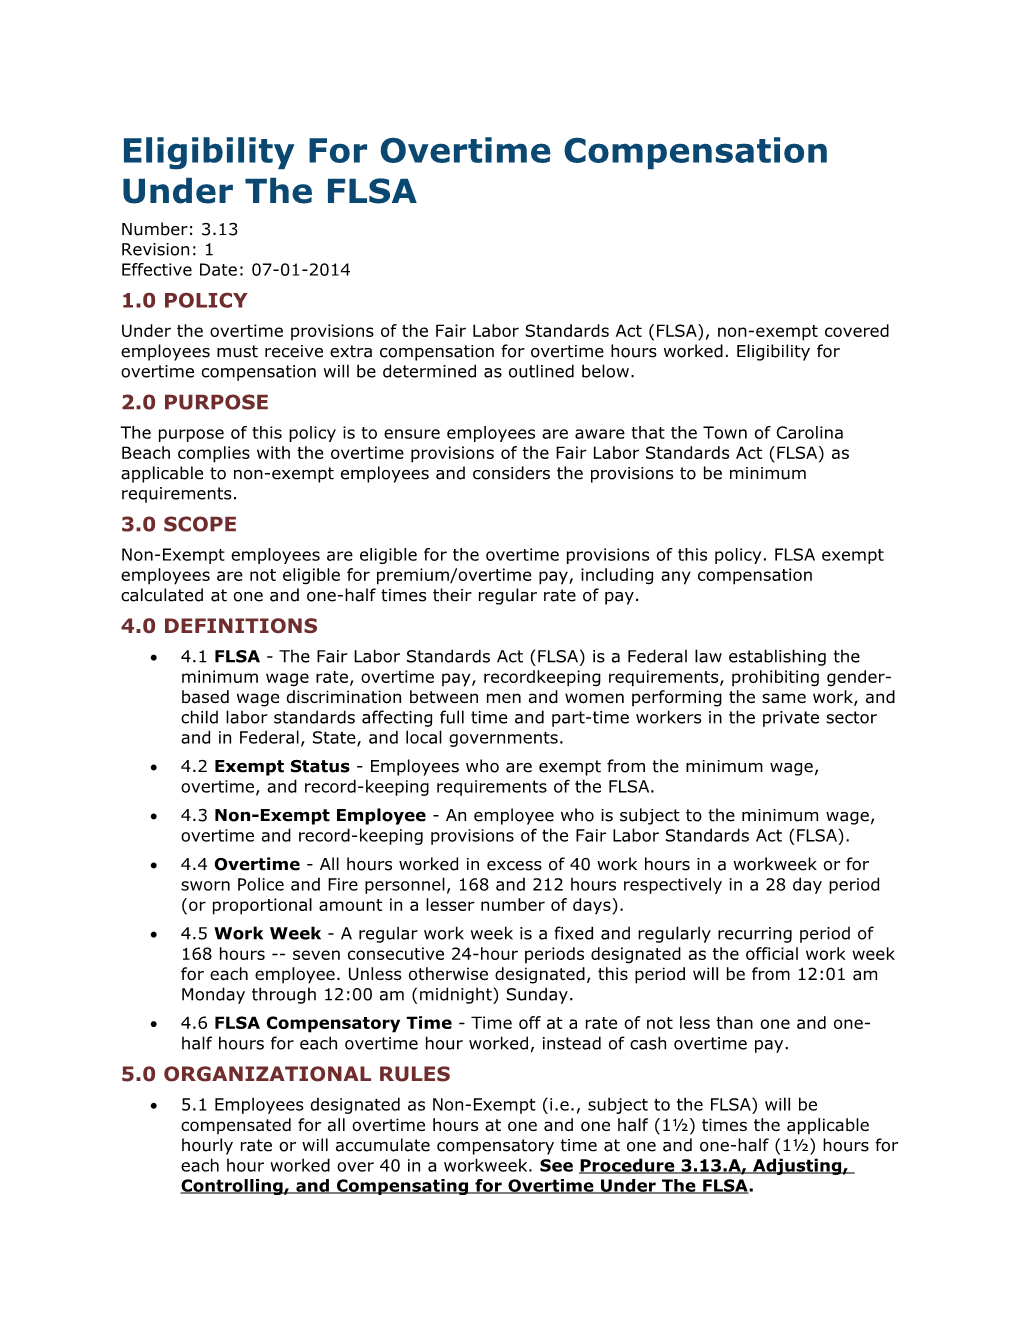 Eligibility for Overtime Compensation Under the FLSA